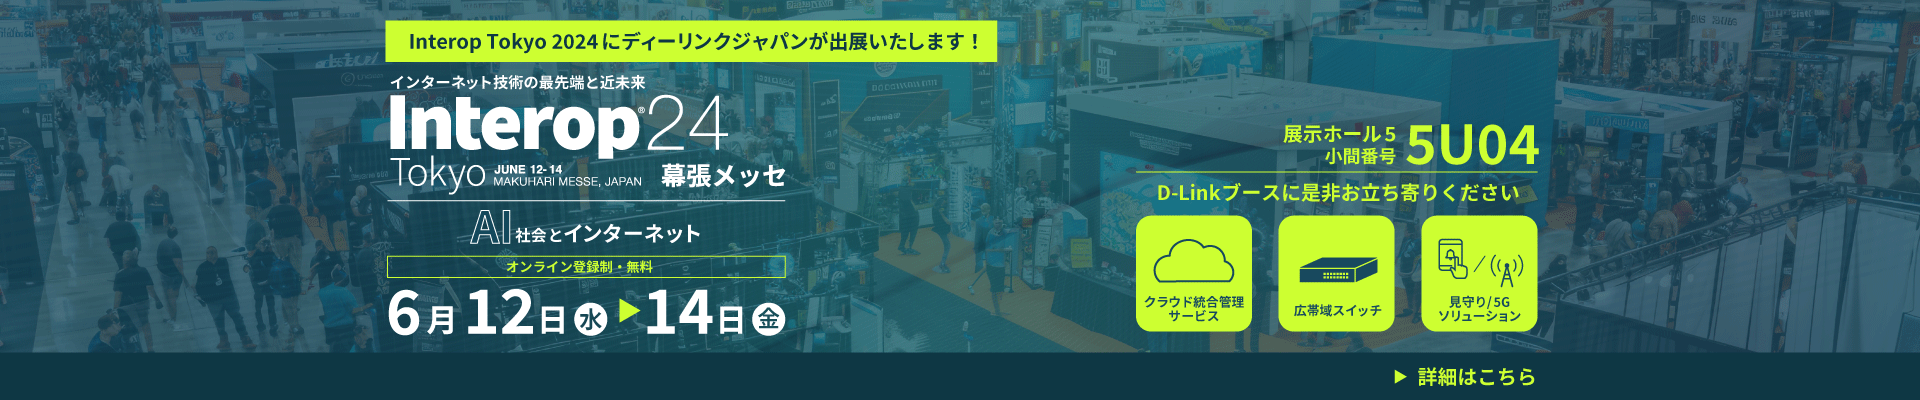 interop Tokyo 2024にディーリンクジャパンが出展